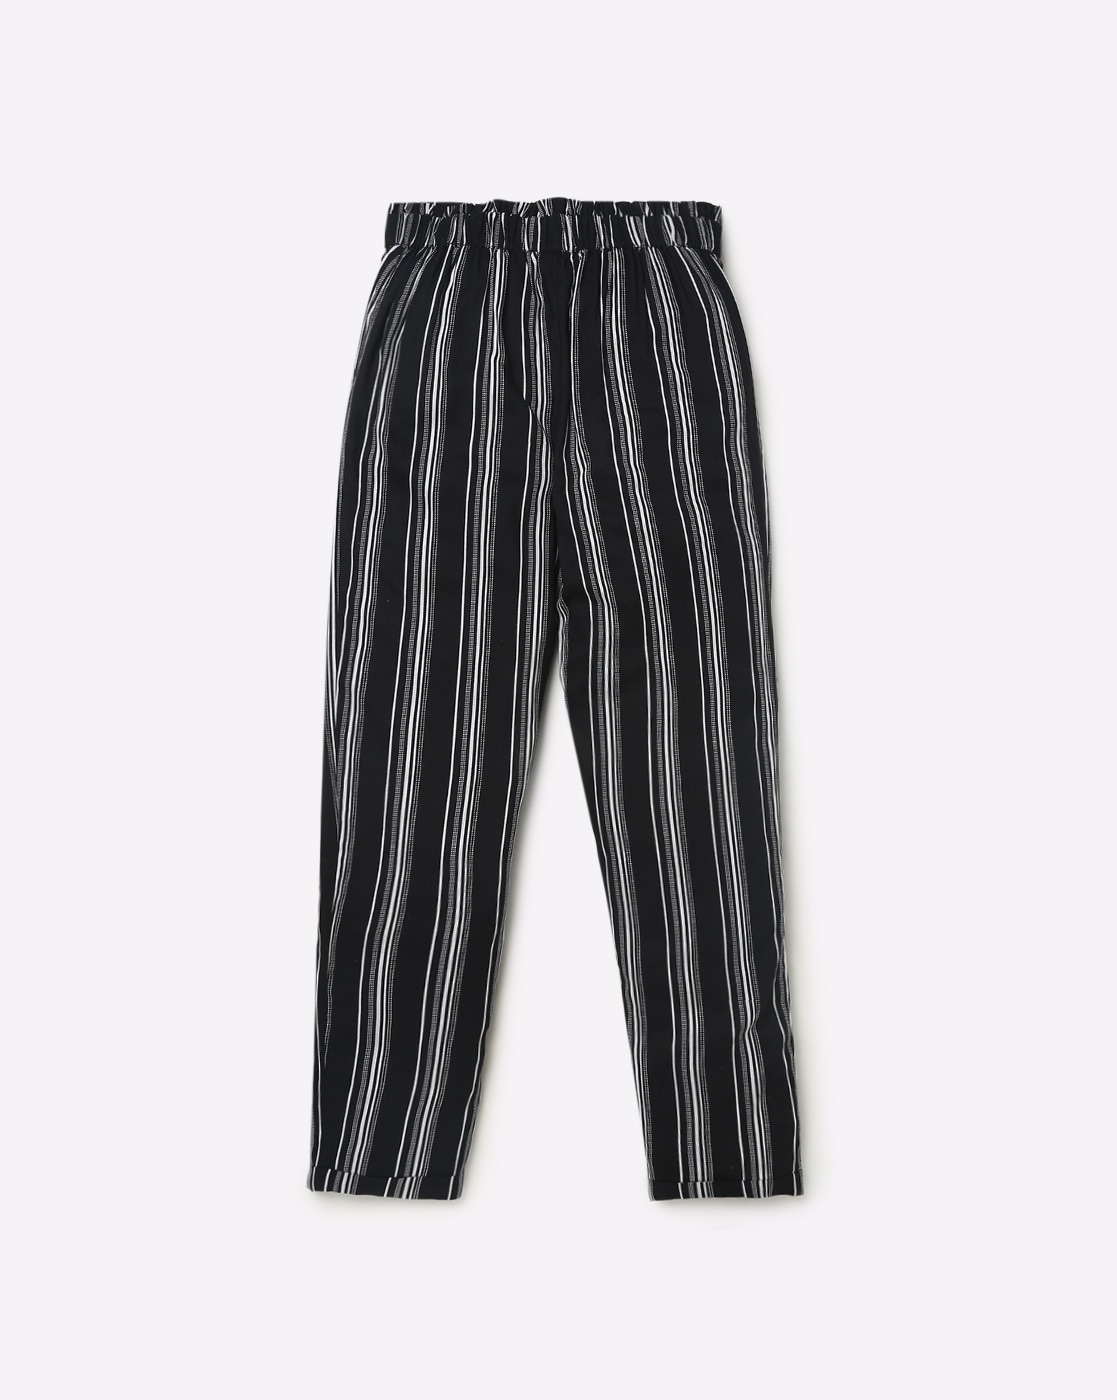 Buy Black Trousers  Pants for Girls by TALES  STORIES Online  Ajiocom